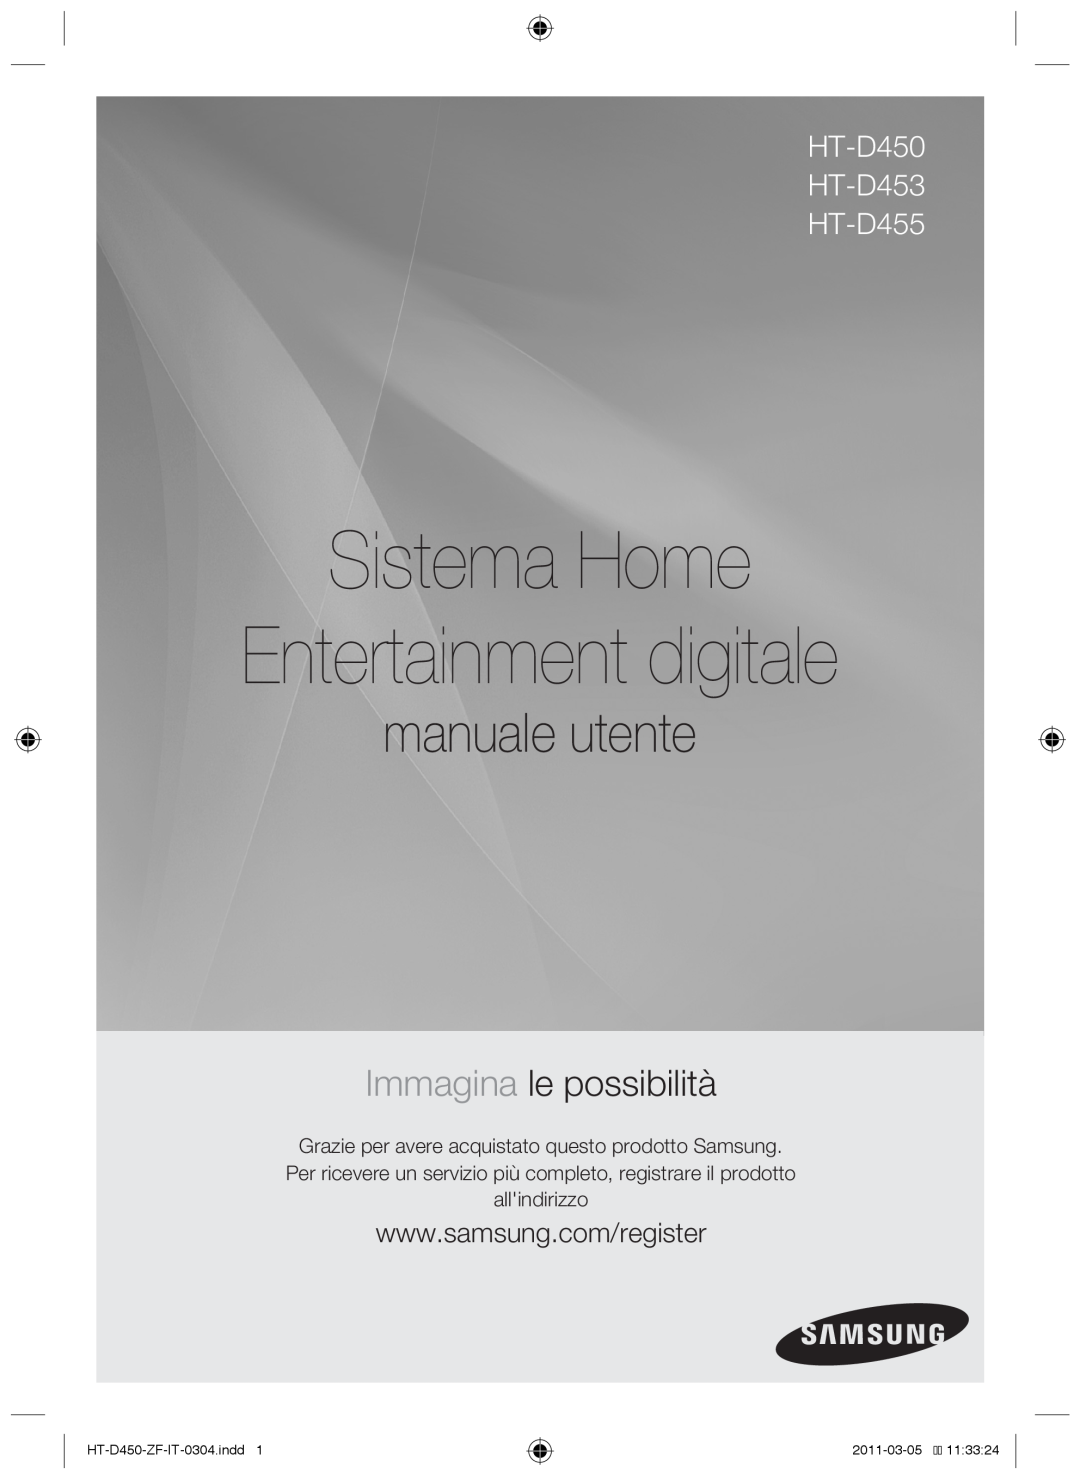 Samsung Sistema Home Entertainment digitale, manuale utente, Immagina le possibilità, HT-D450 HT-D453 HT-D455 